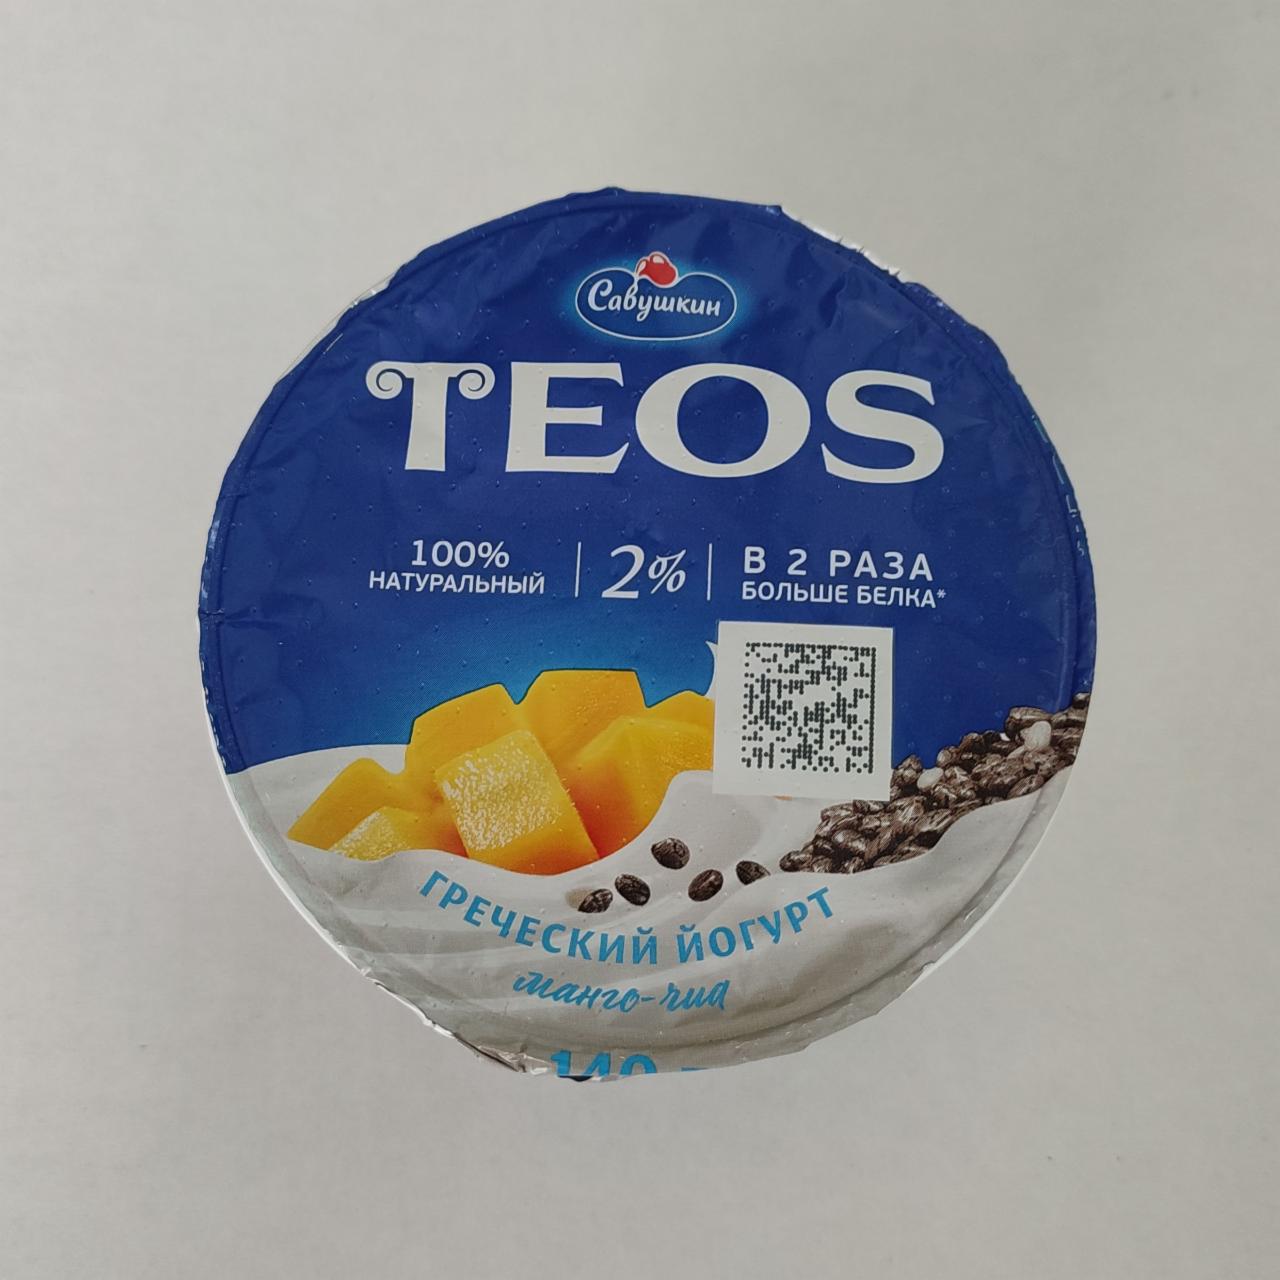 Фото - греческий йогурт Теос манго-чиа Савушкин